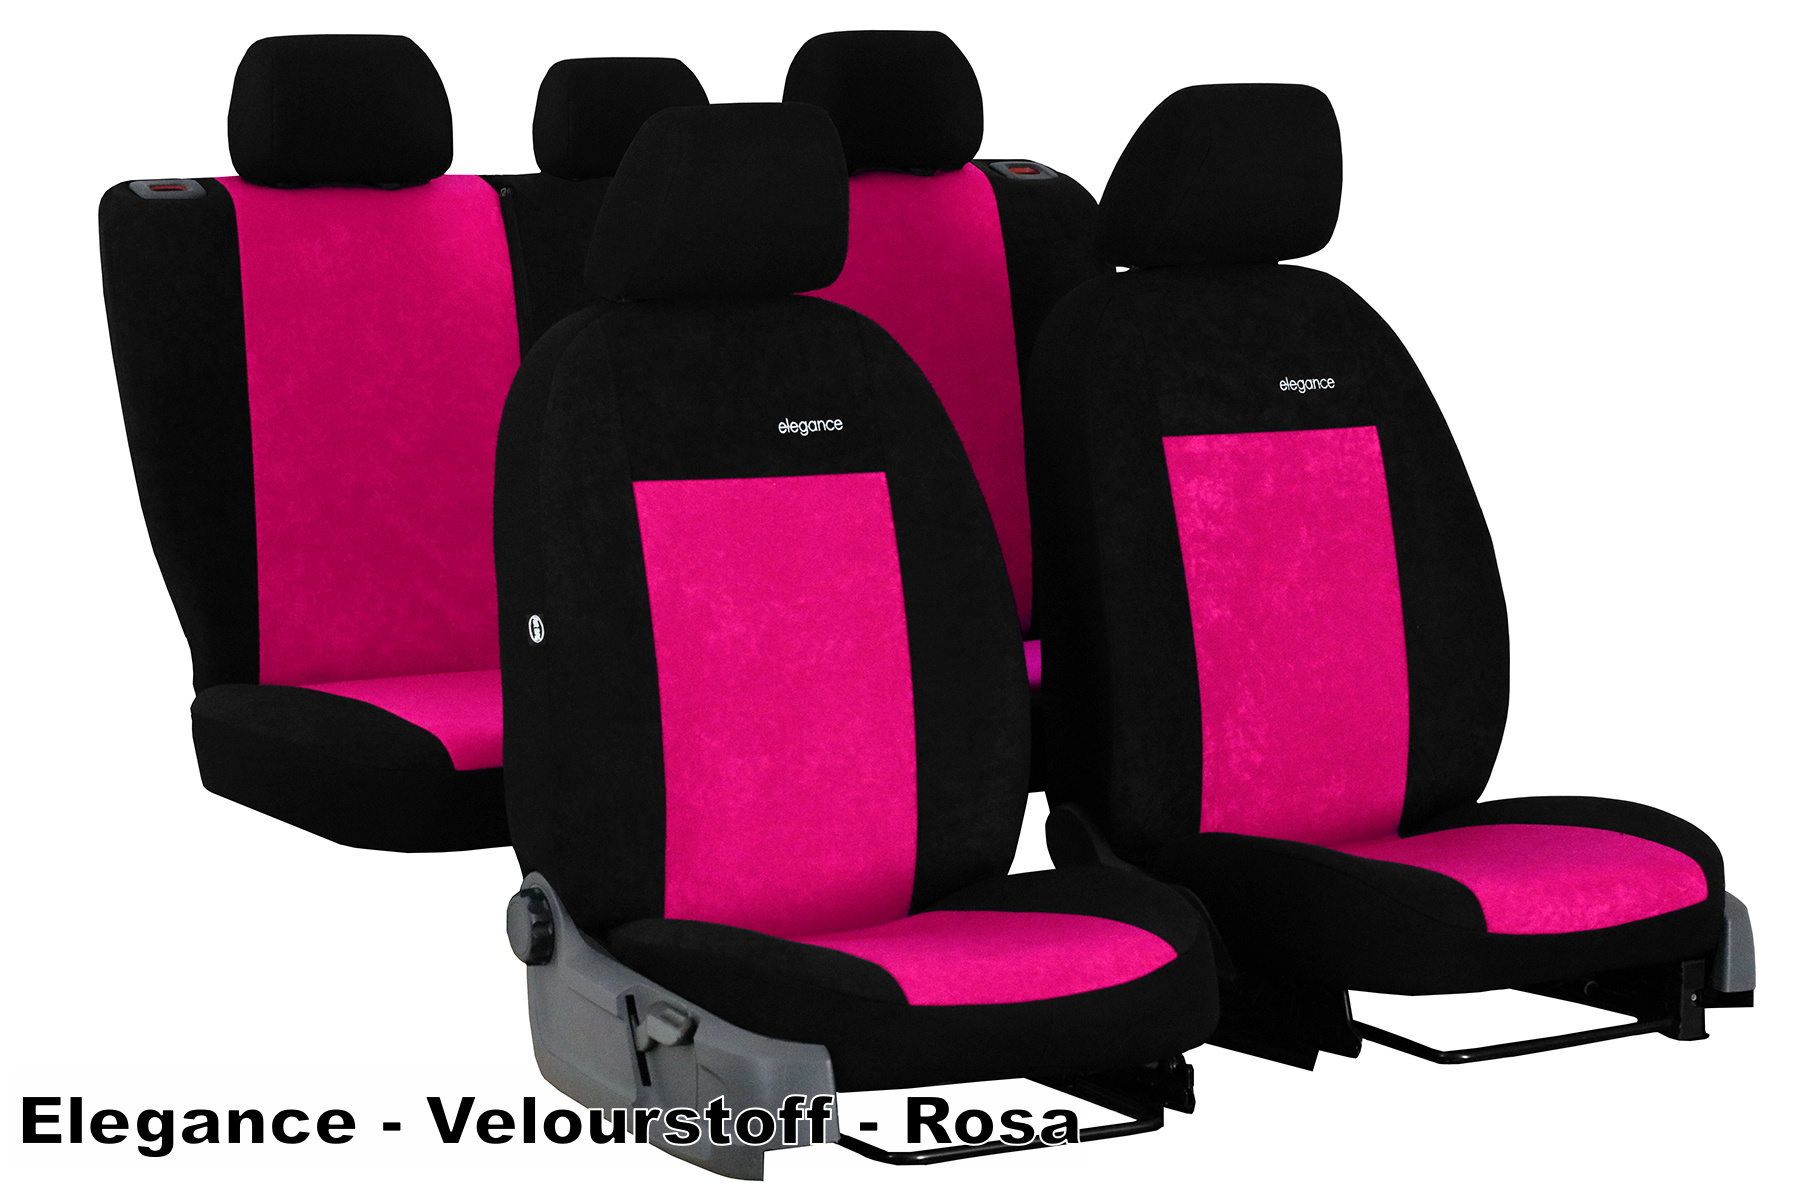 Autositzschutz Für Kinder, Stoff-autositz, Sitzschoner Mit